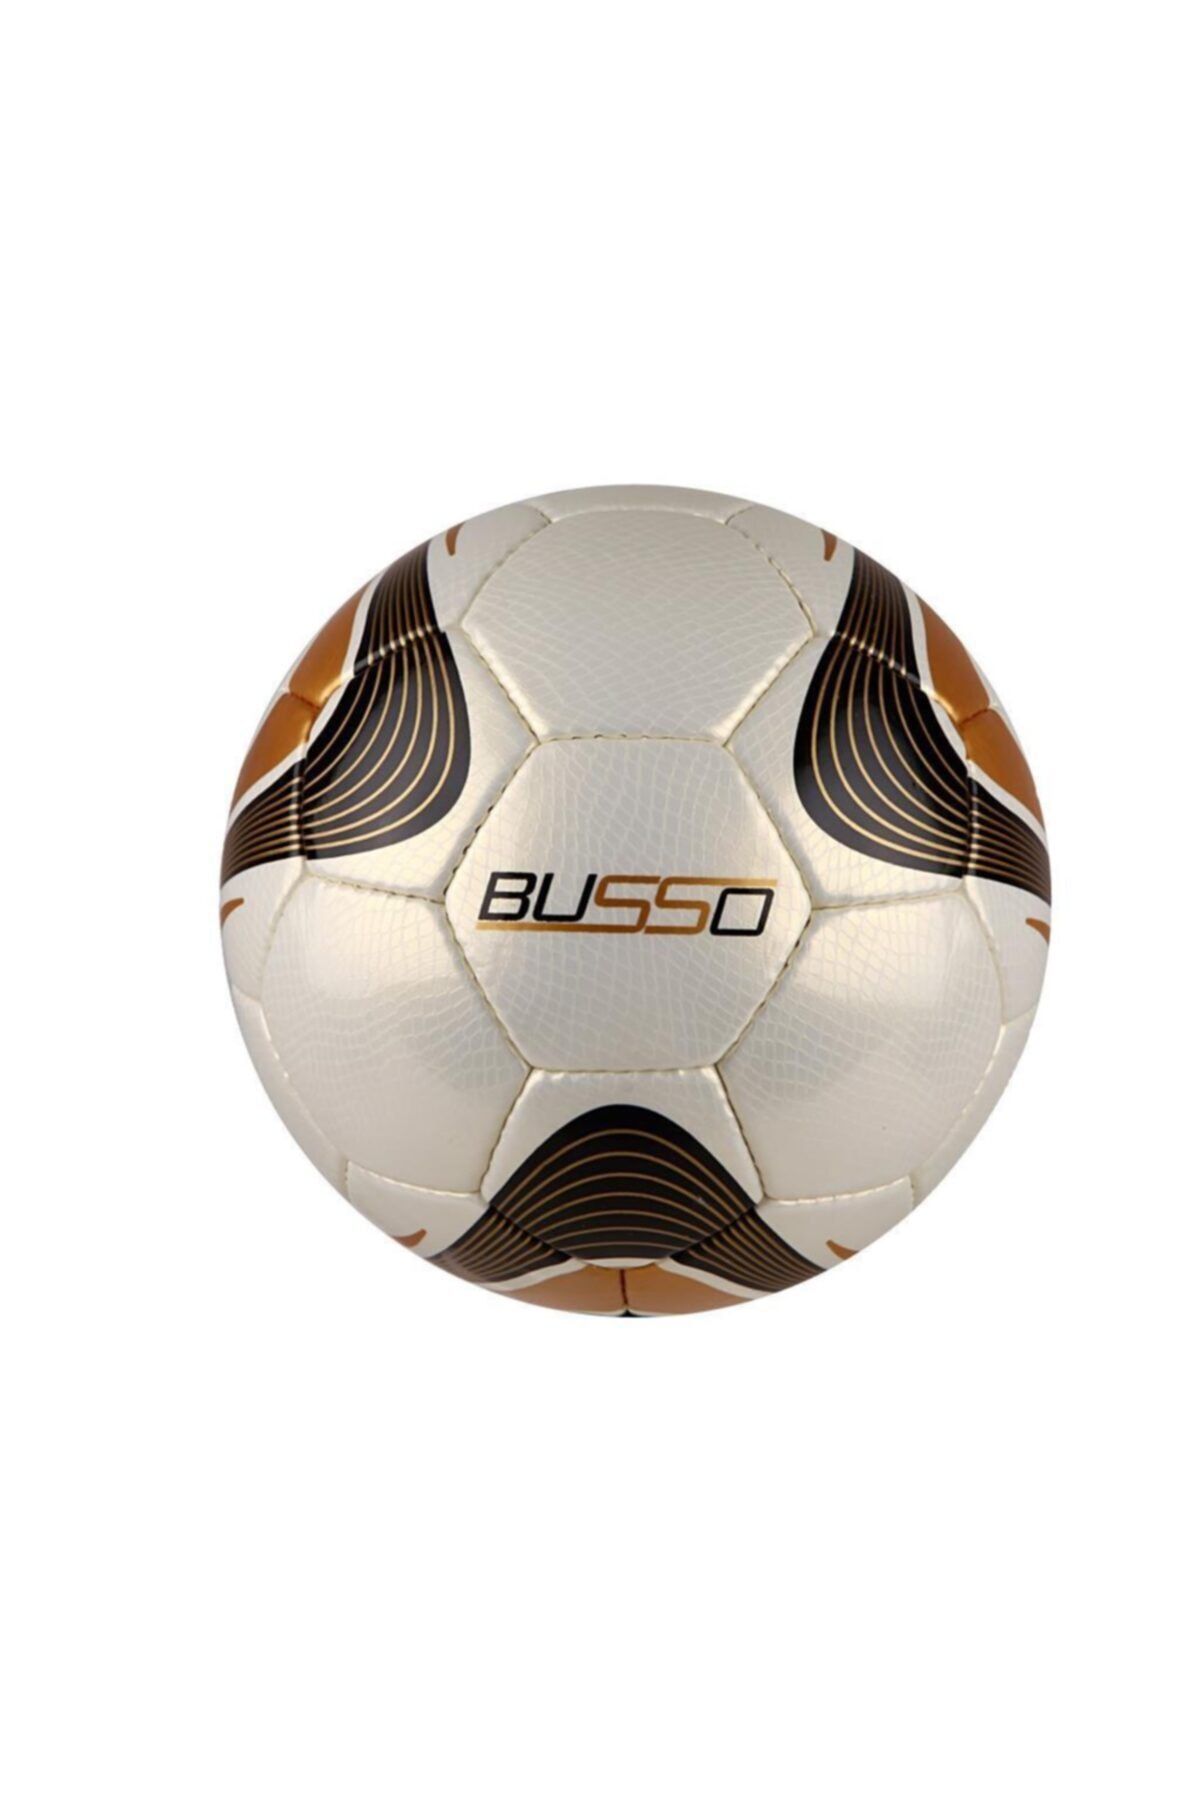 Busso Super Futbol Topu No:4- Yeni